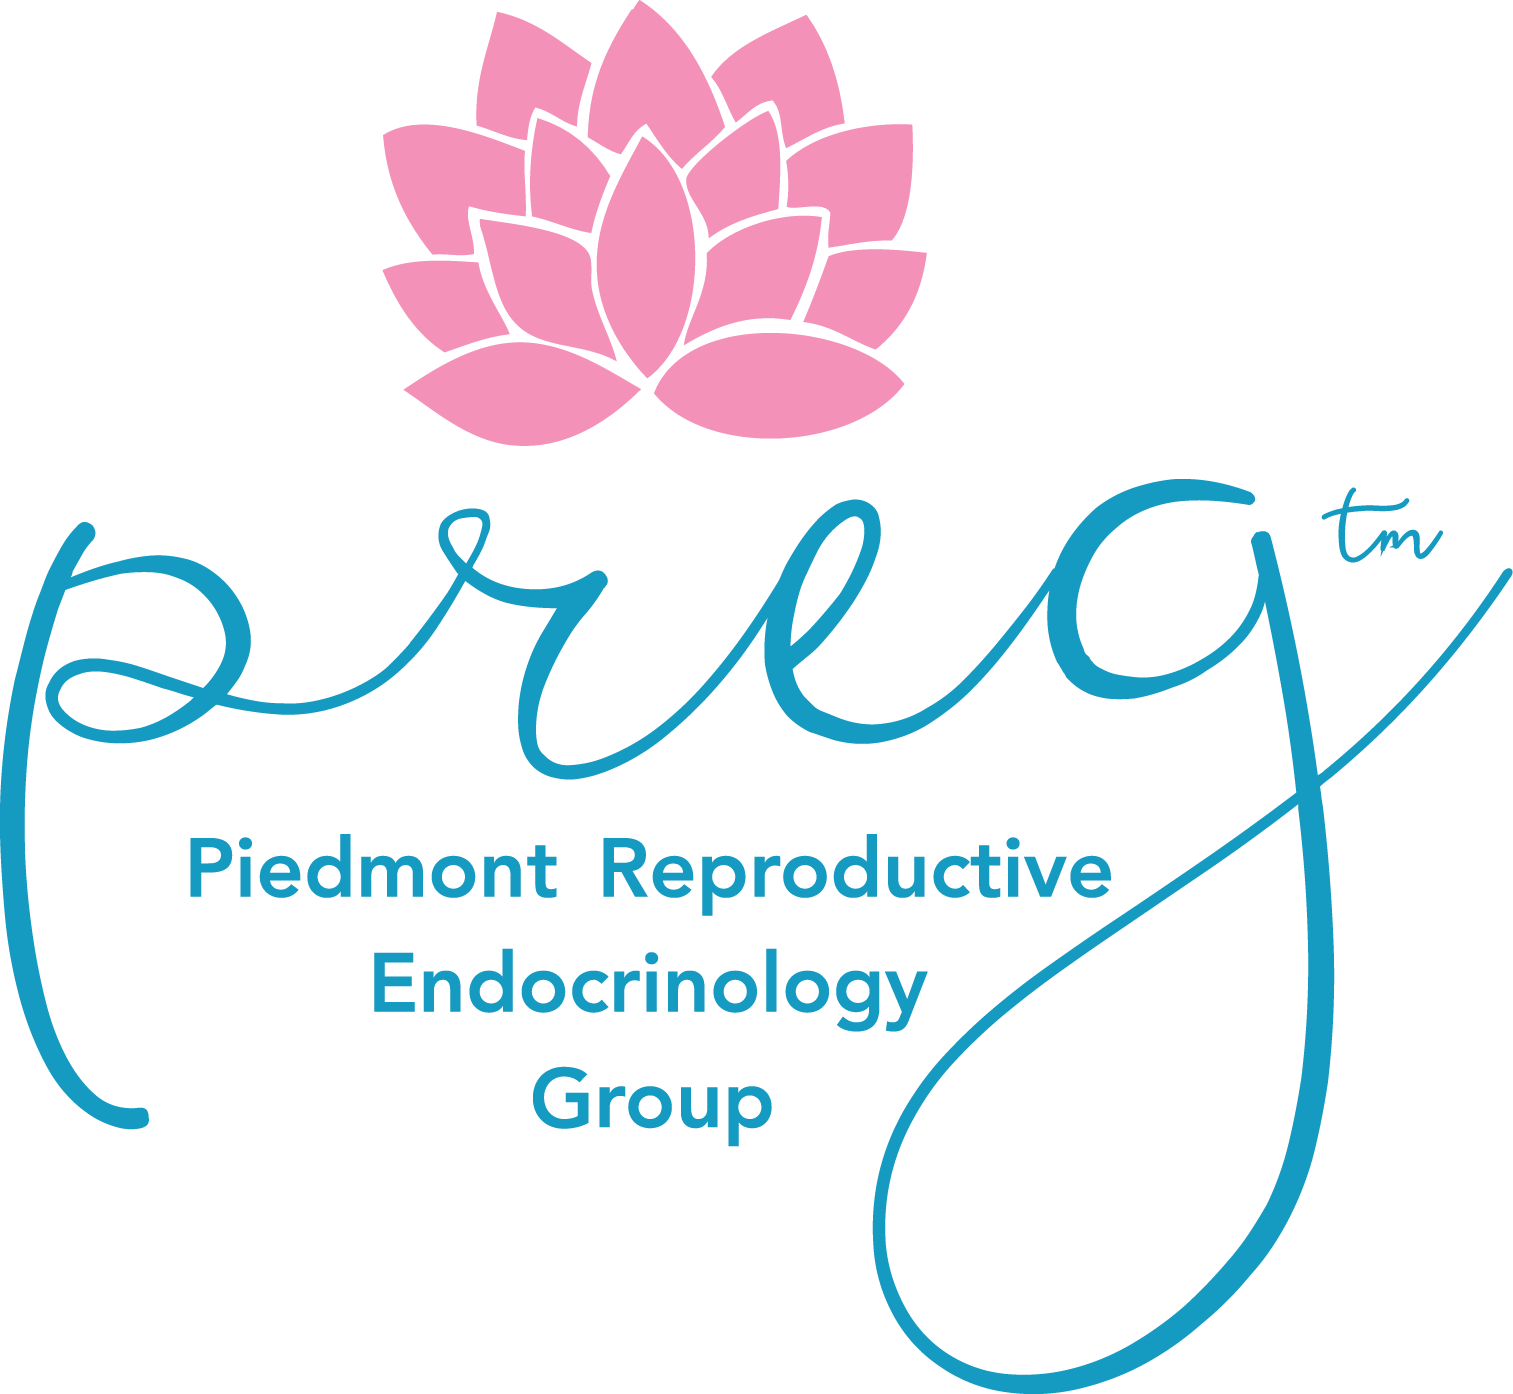 PREG Chooses FertilityEHR